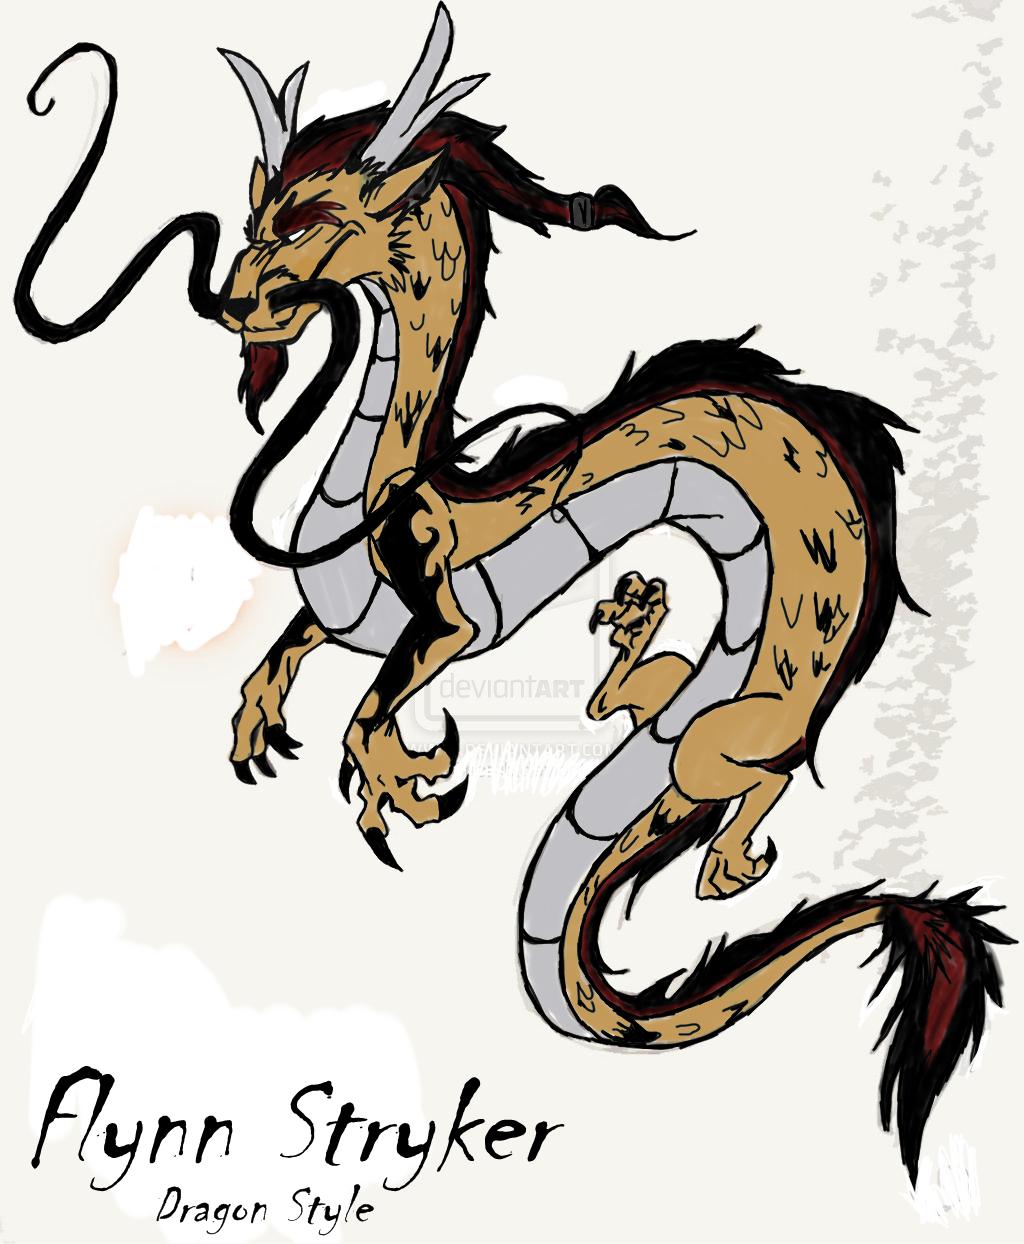 Most recent image: Flynn Stryker Dragon Sketch